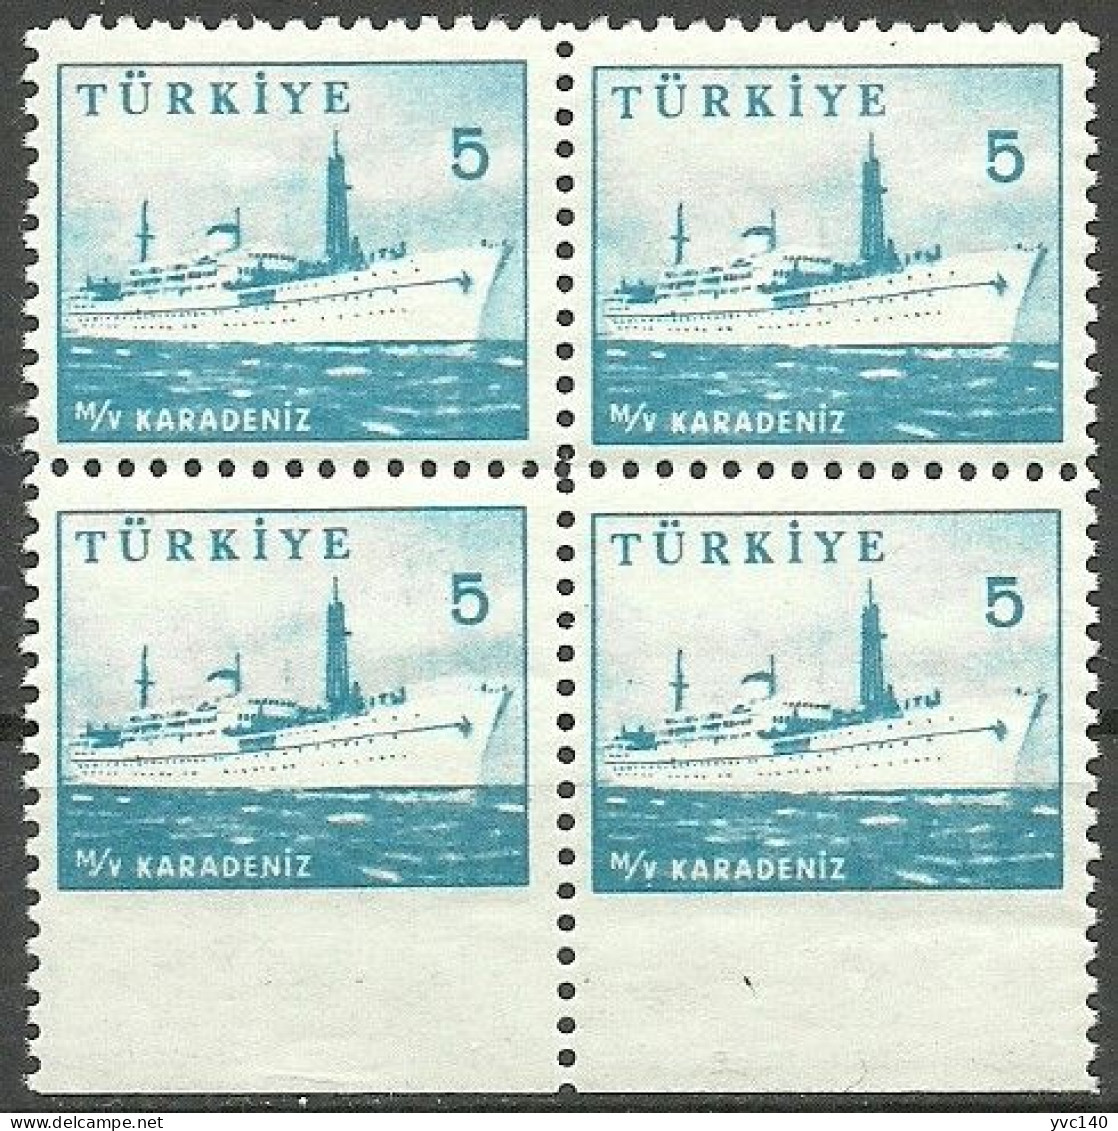 Turkey; 1959 Pictorial Postage Stamp 5 K. ERROR "Imperforate Edge" - Unused Stamps